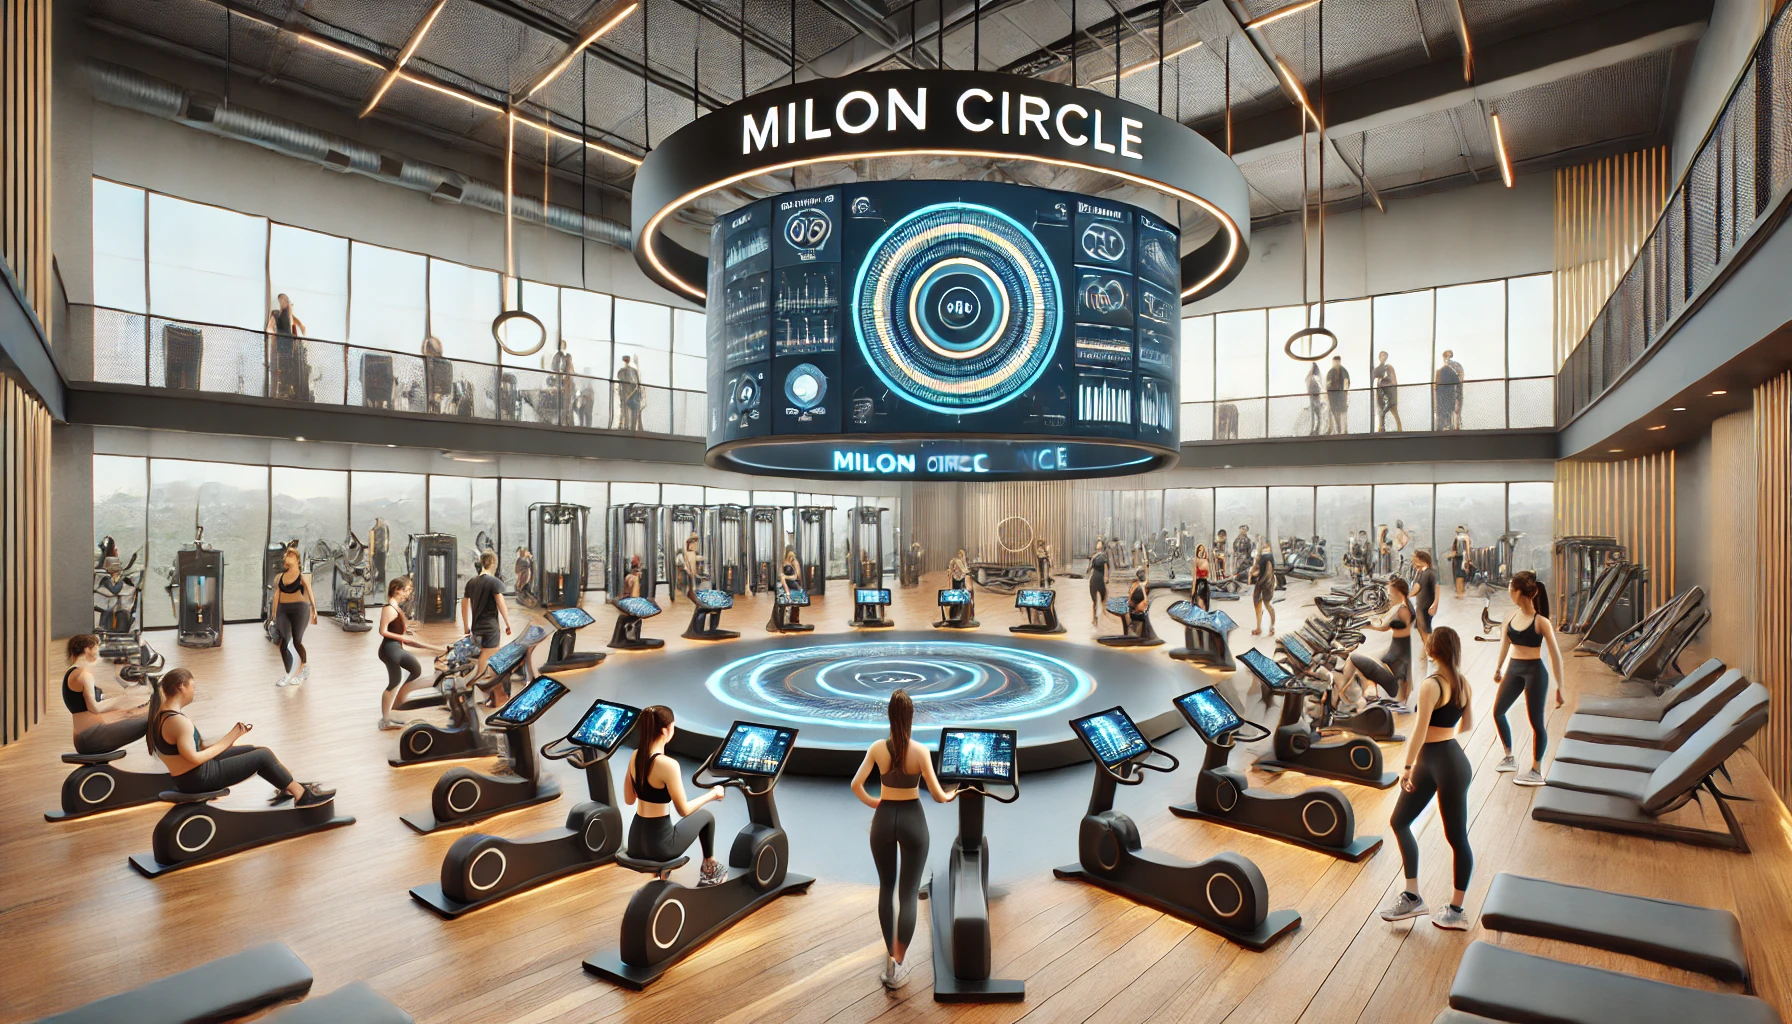 Maximiere dein Training mit dem Milon Zirkel im Fitness Concept Studio!